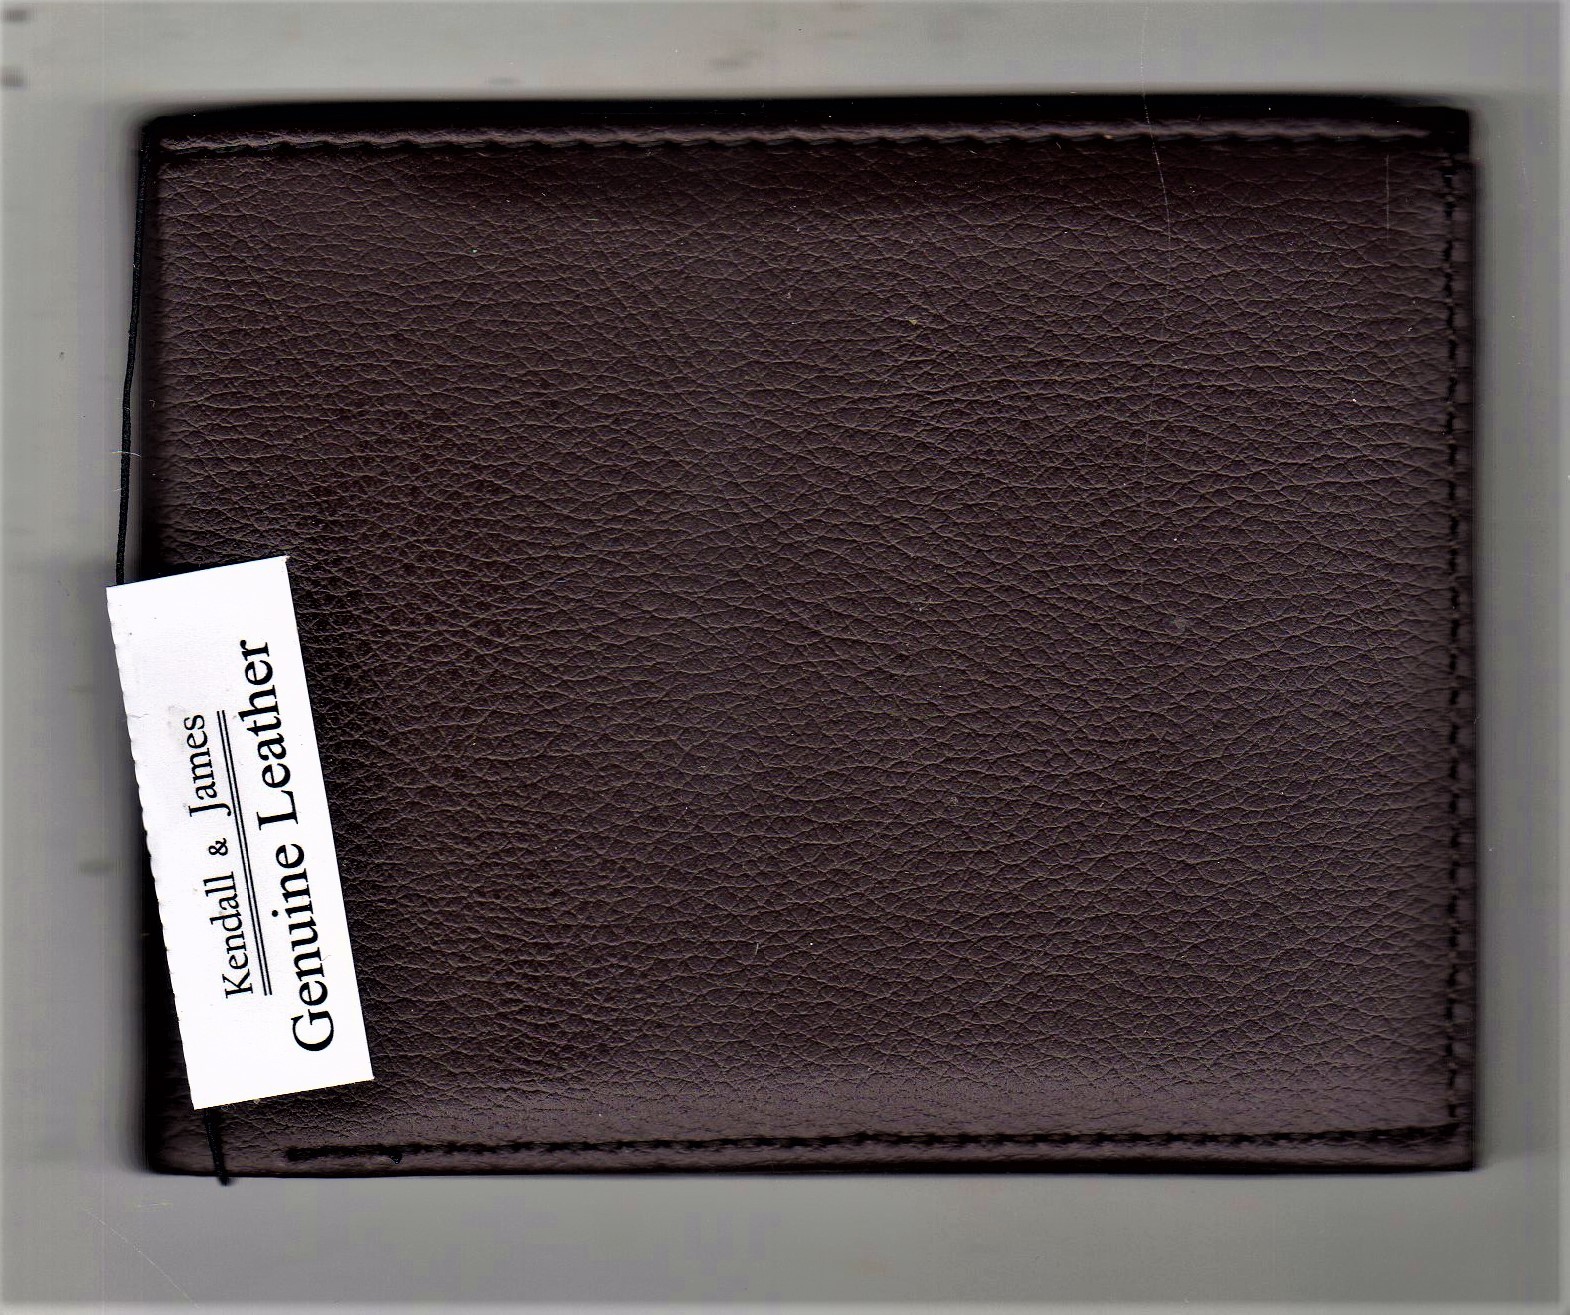 MICHAEL KORS Genuine Men Jet Leather Slim Billfold Wallet + Money Clip Set  BLACK